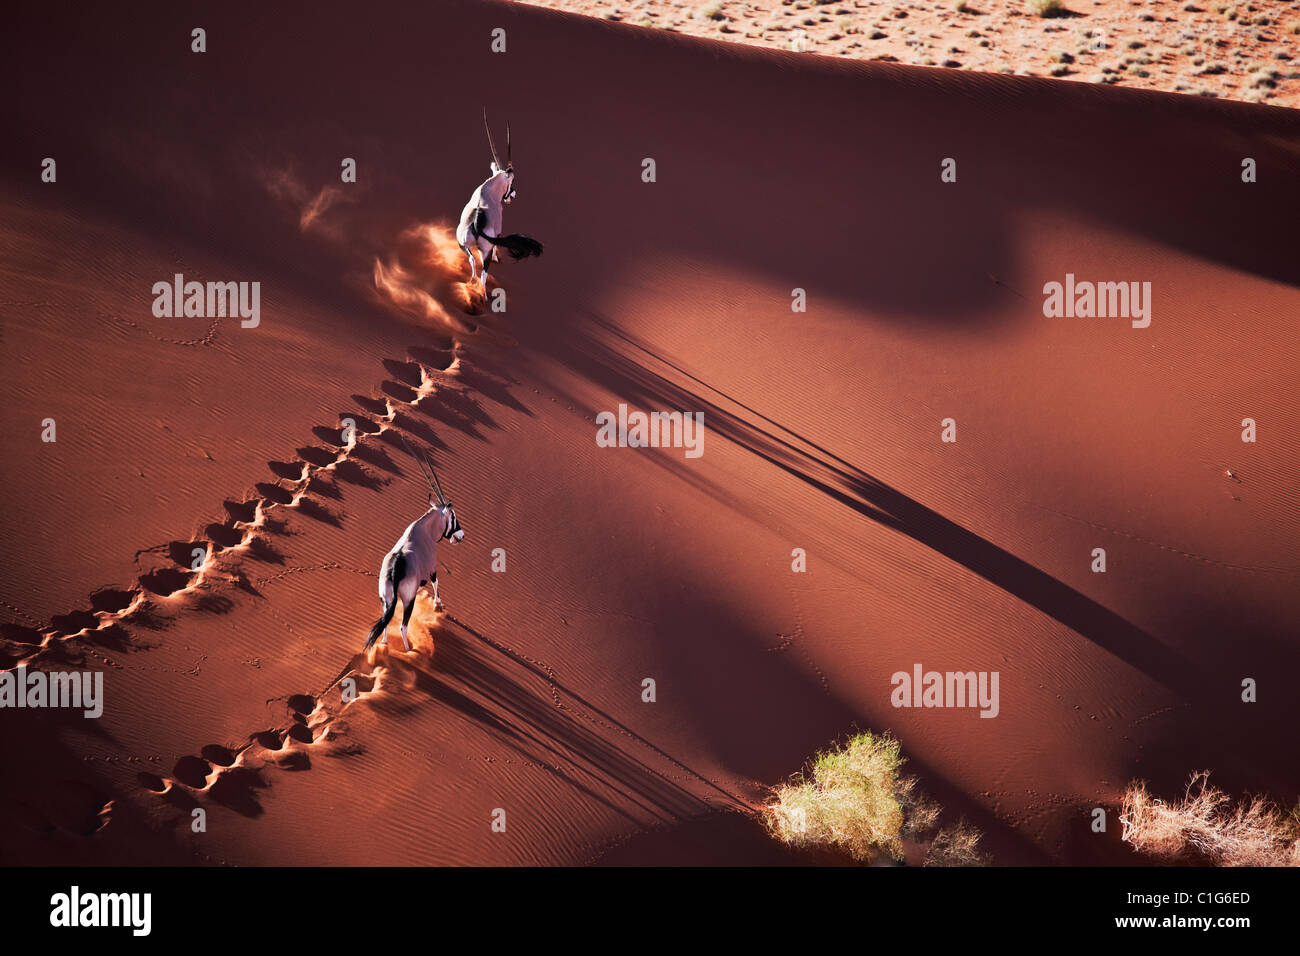 Gemsbok (Oryx gazella) In tipico habitat Deserto Deserto Namibiano dune di sabbia Foto Stock